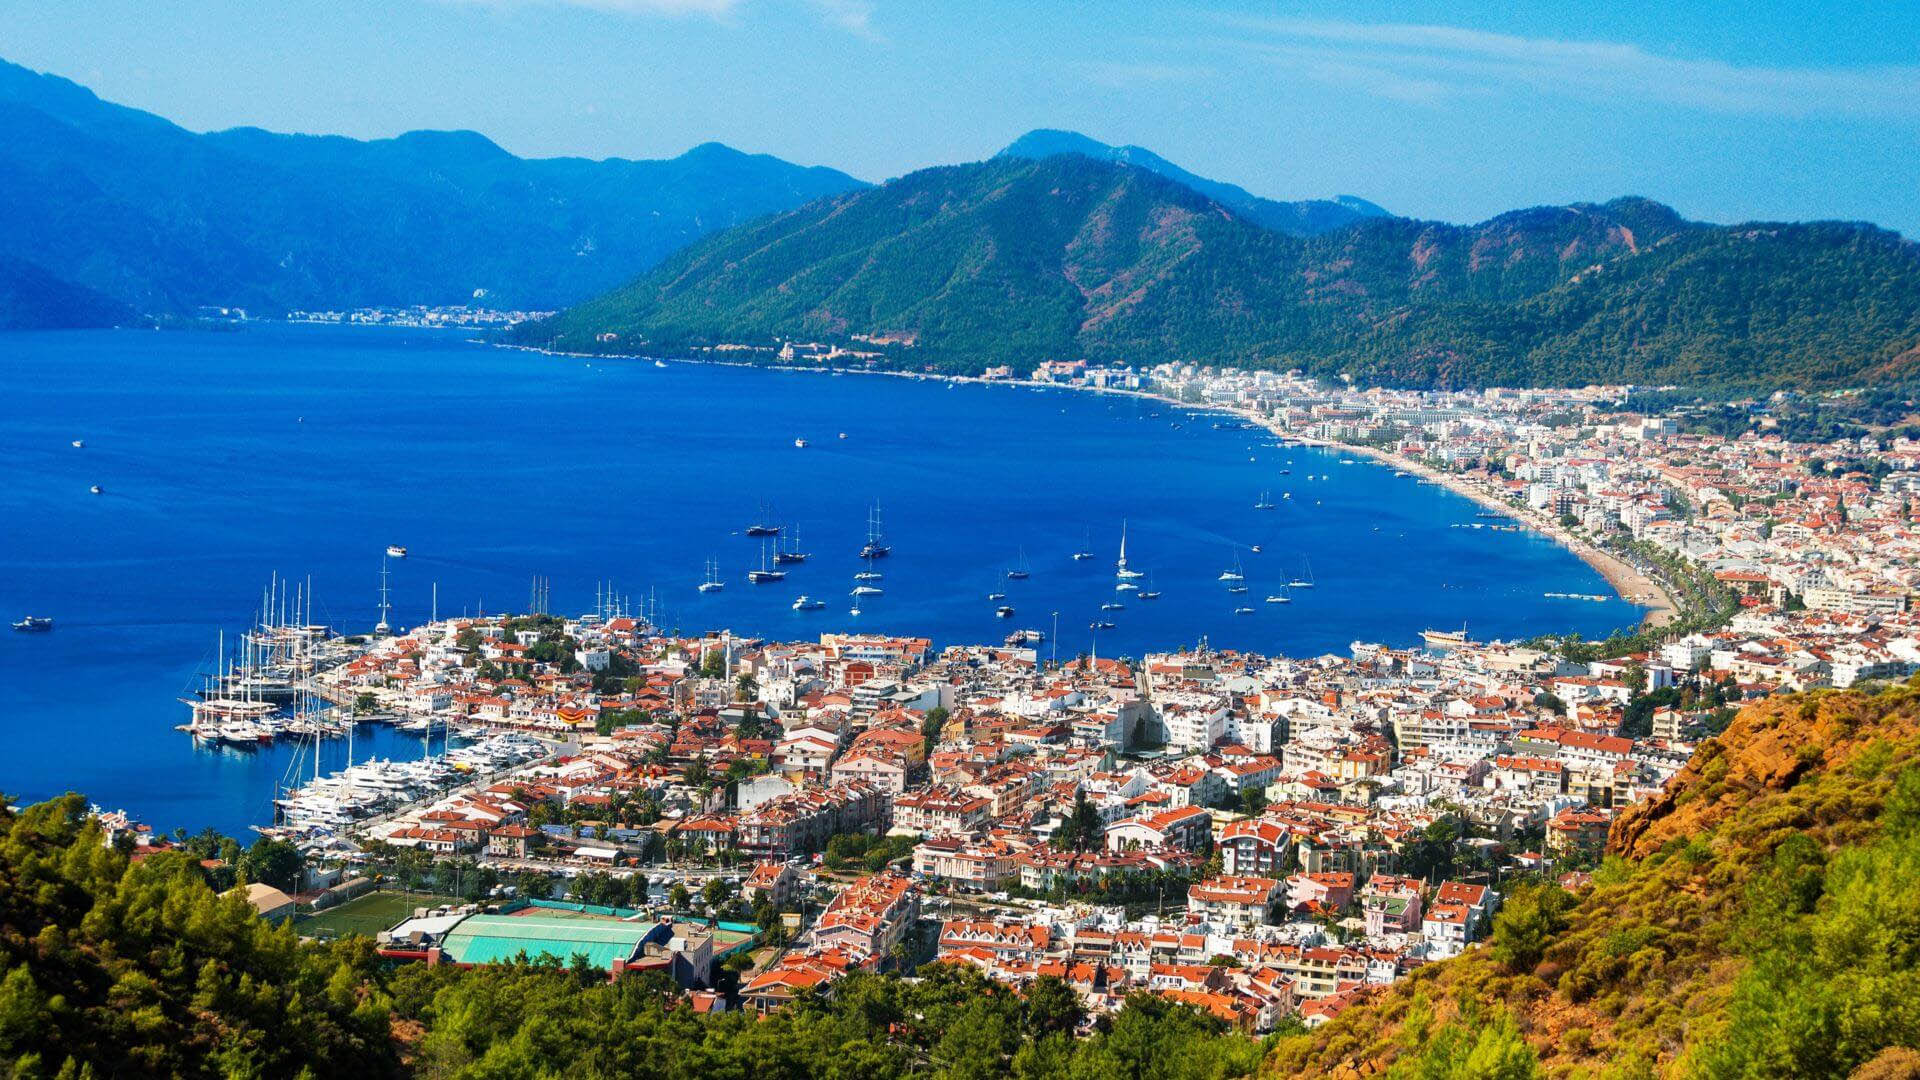 Marmaris: A Mediterranean Paradise on the Turkish Riviera